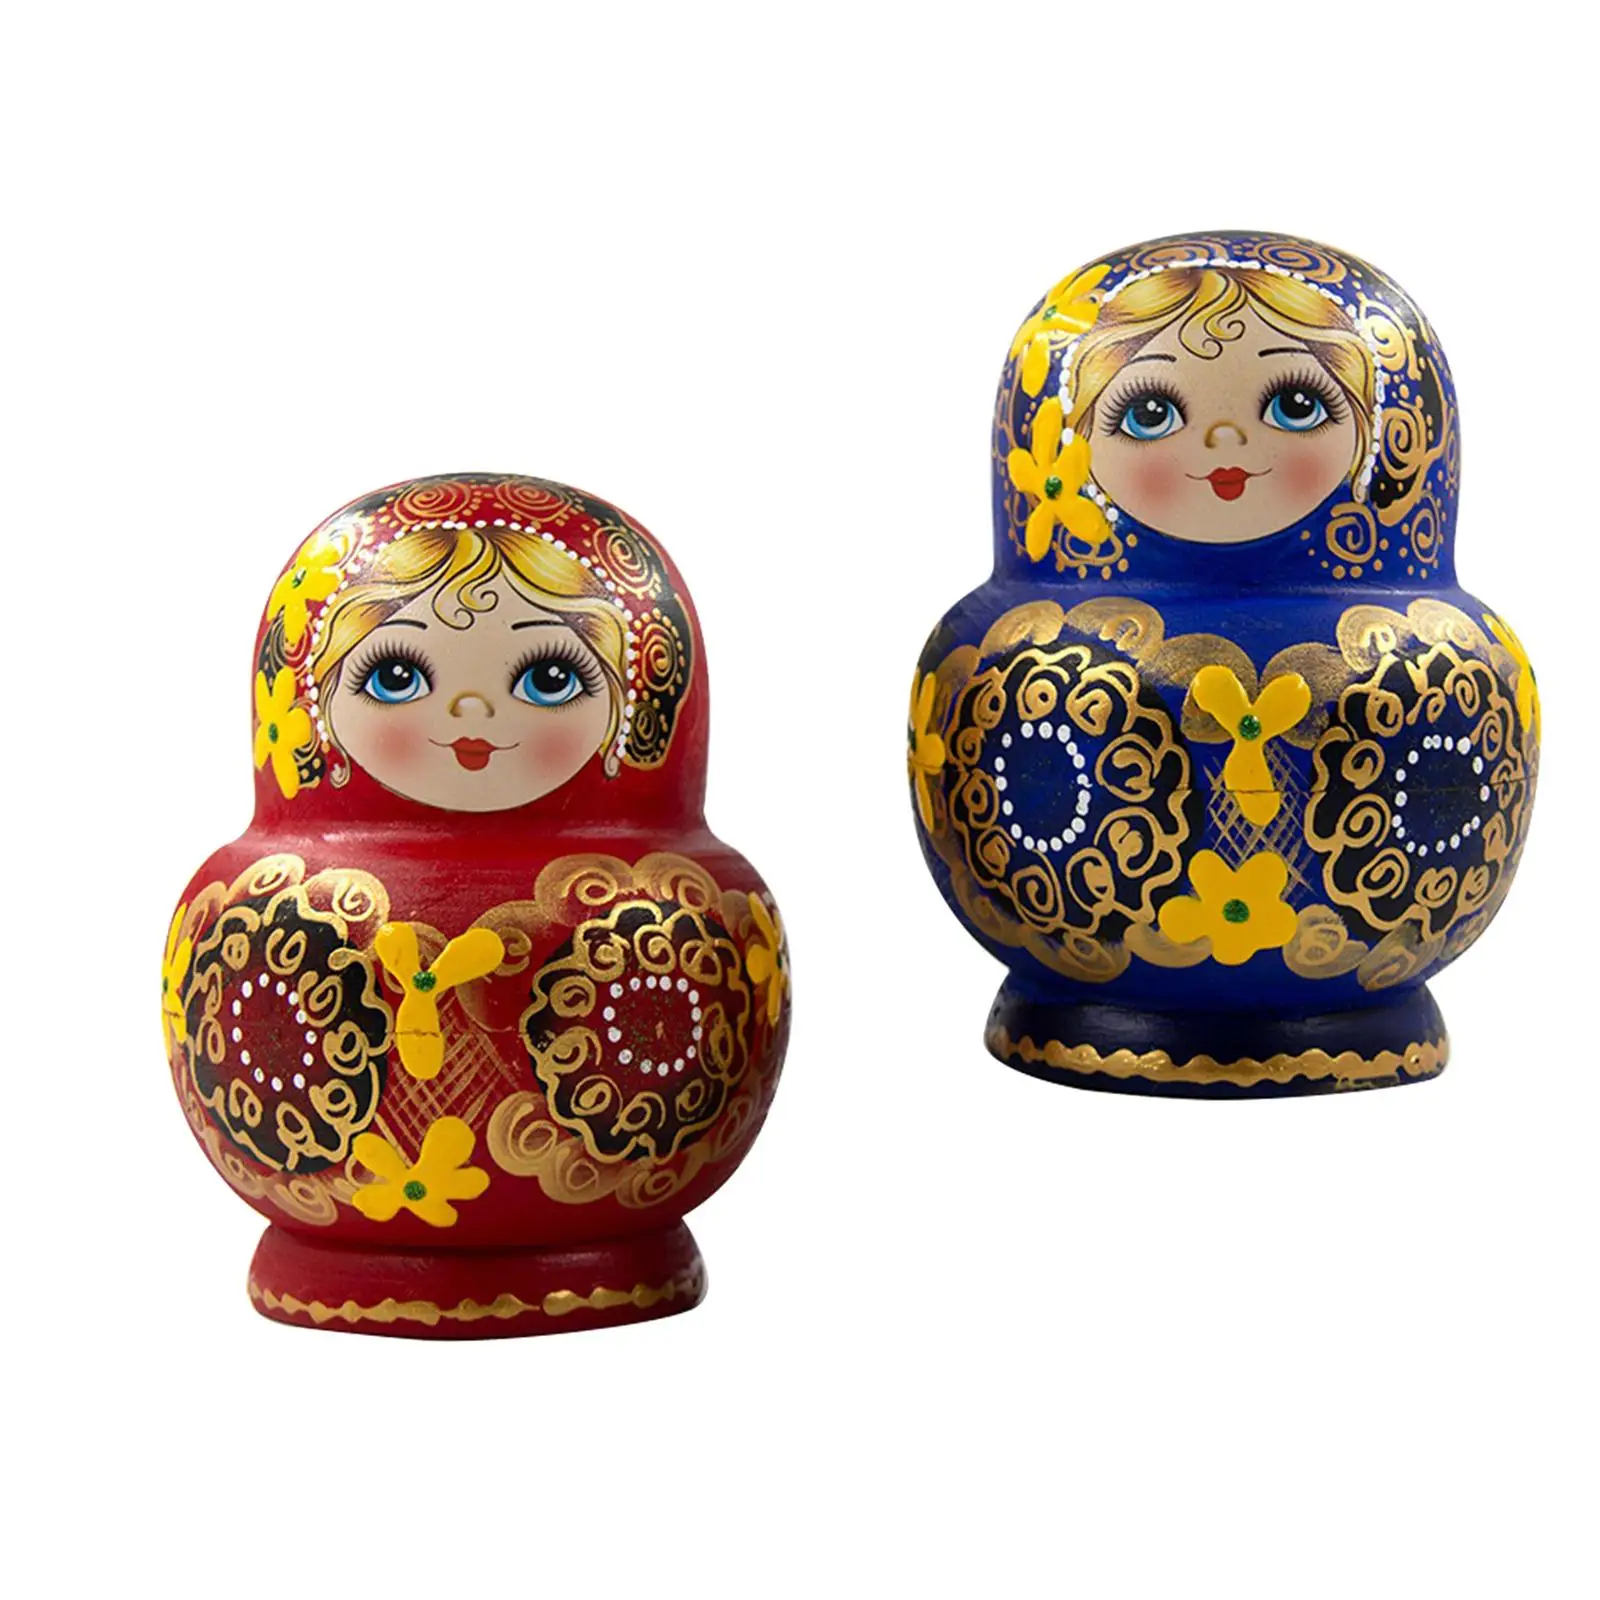 10x Handmade Russian Nesting Dolls Nested Toy Matryoshka Dolls for Room Office Decoration Birthday Gift Ornaments